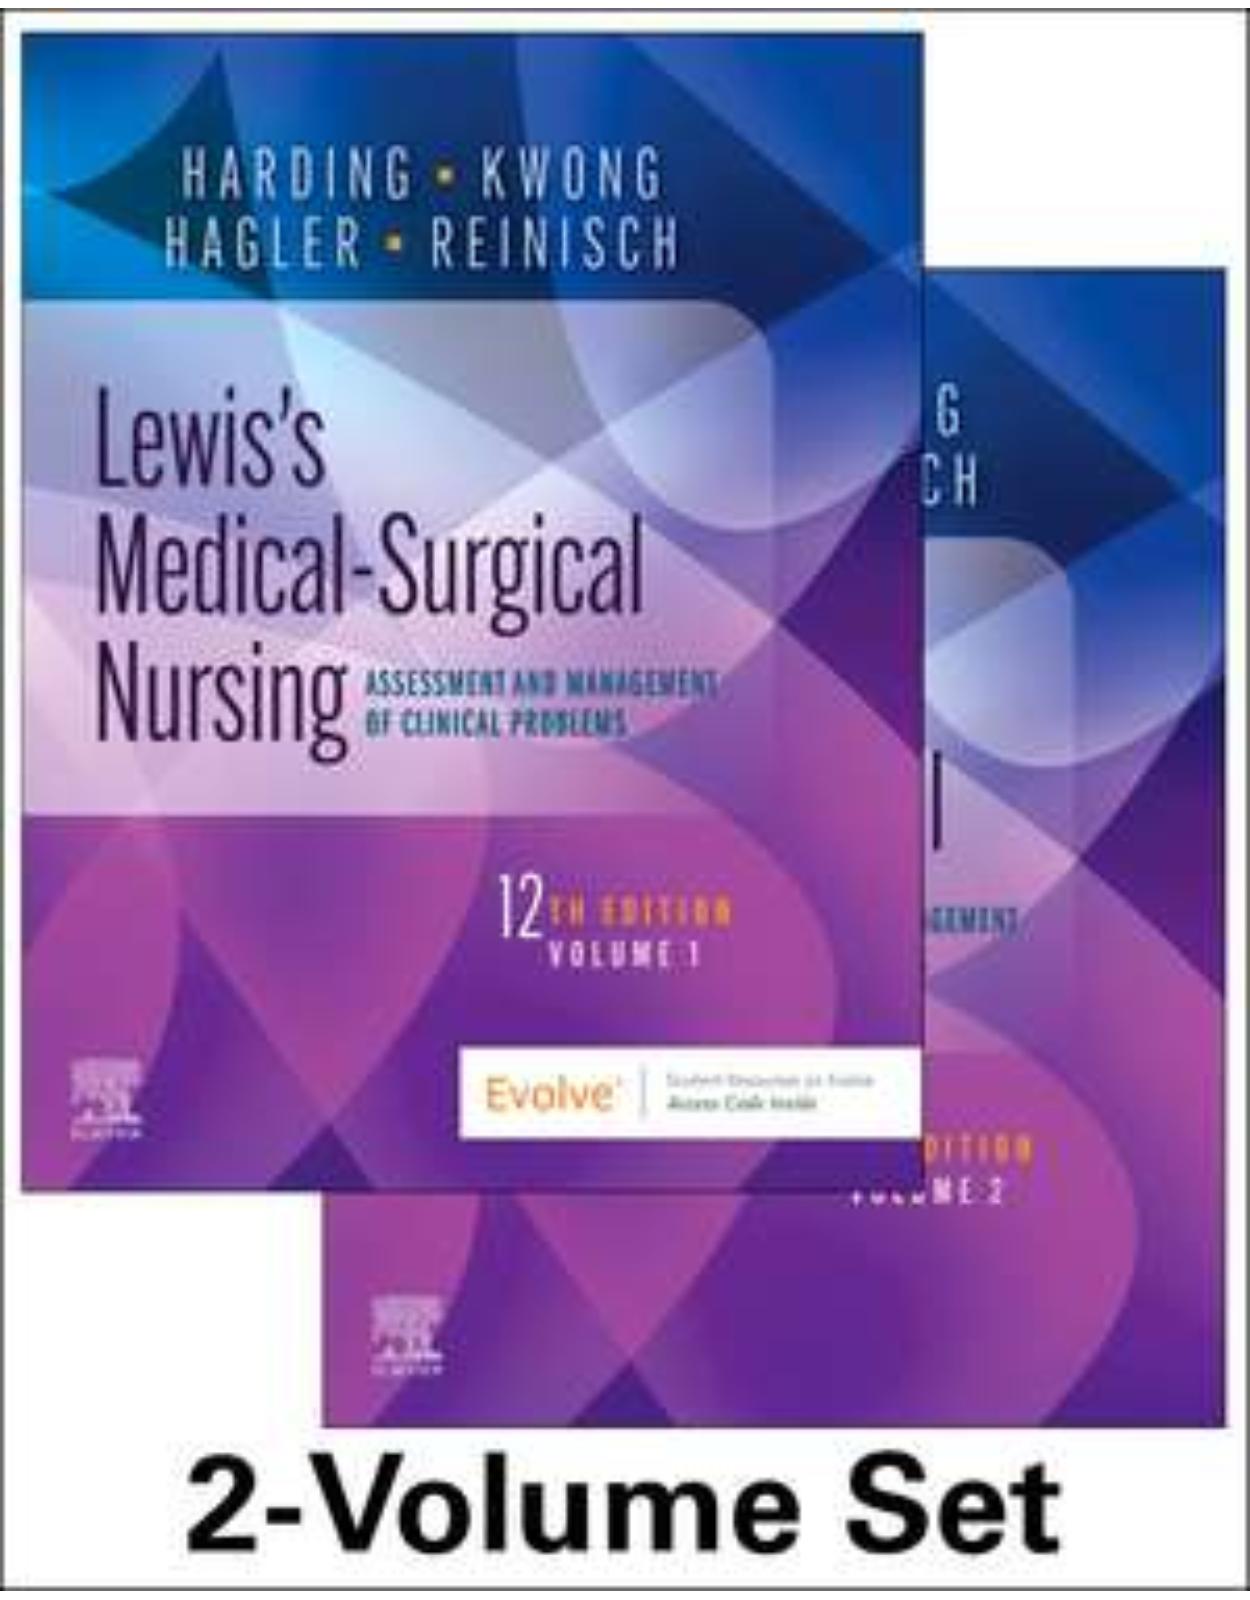 Lewis's Medical-Surgical Nursing - 2-Volume Set, 12th Edition